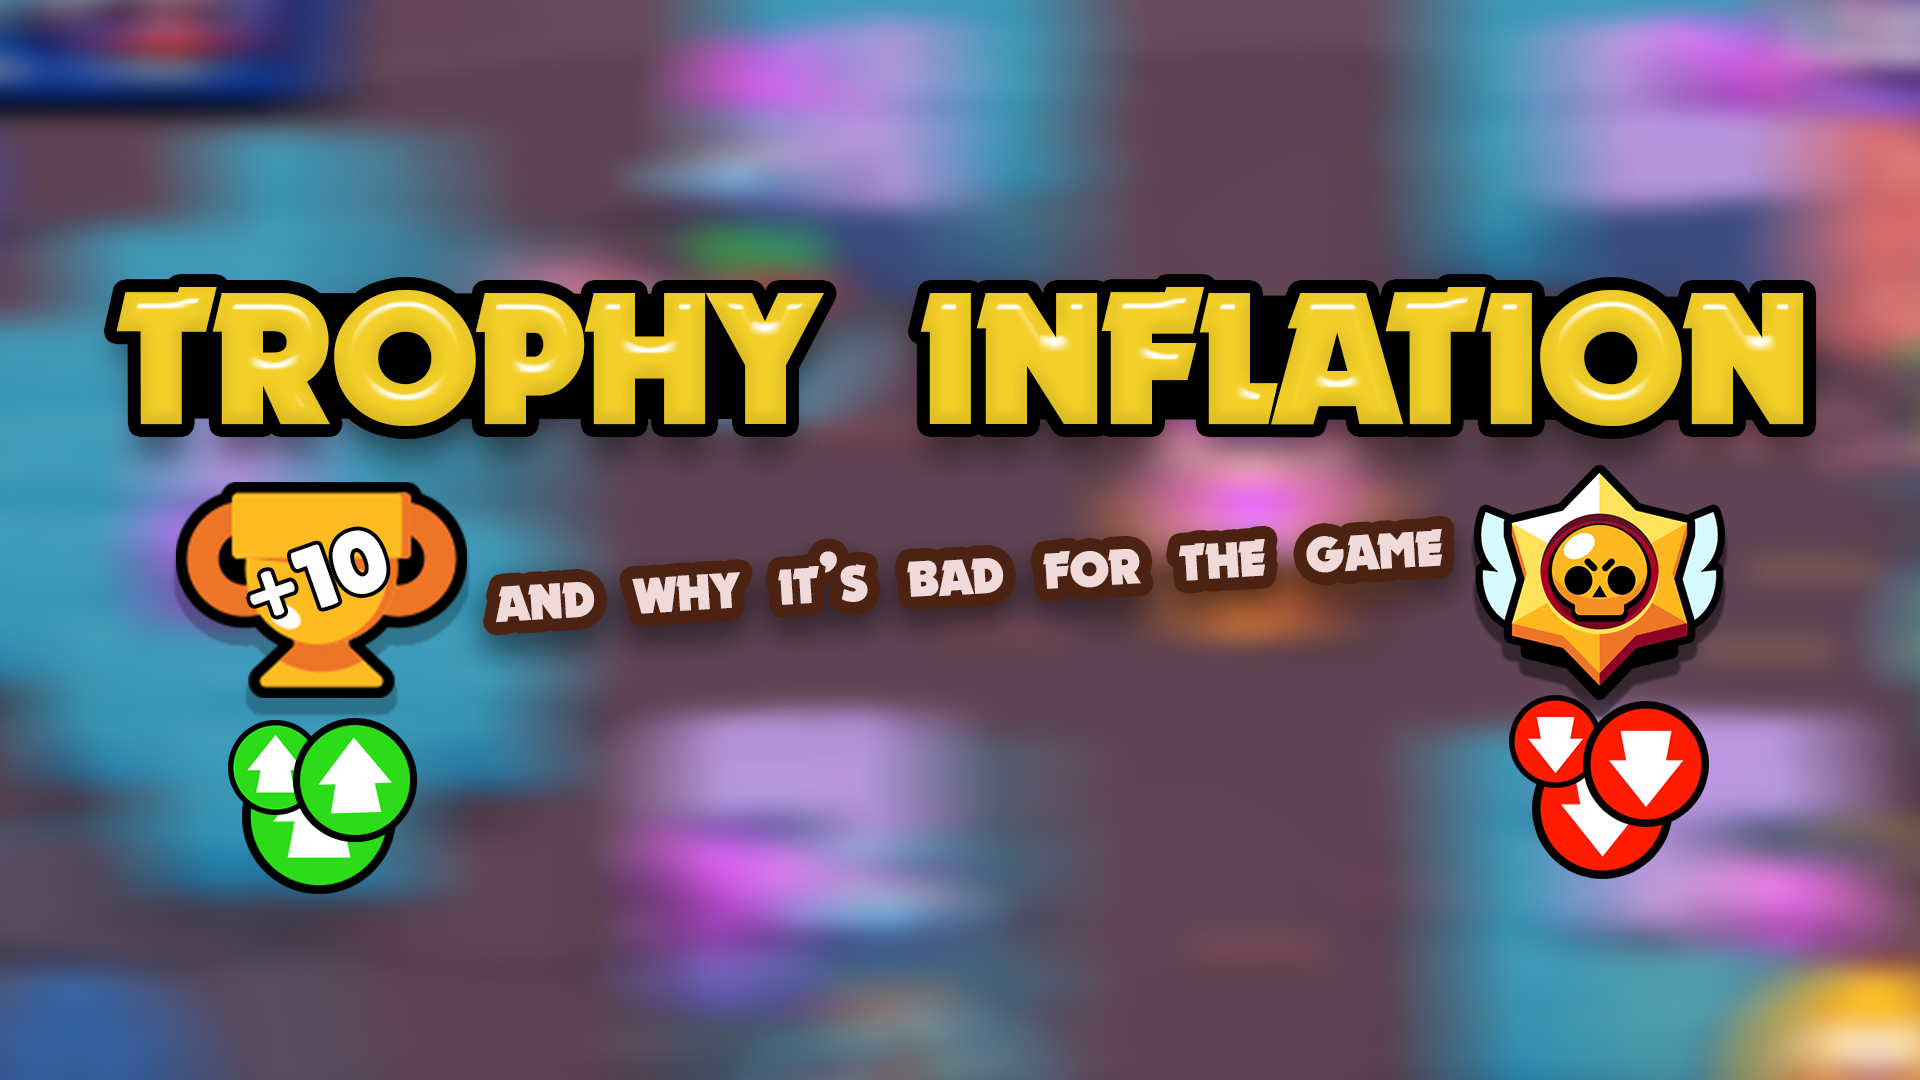 The Trophy Inflation Crisis Old Bsd